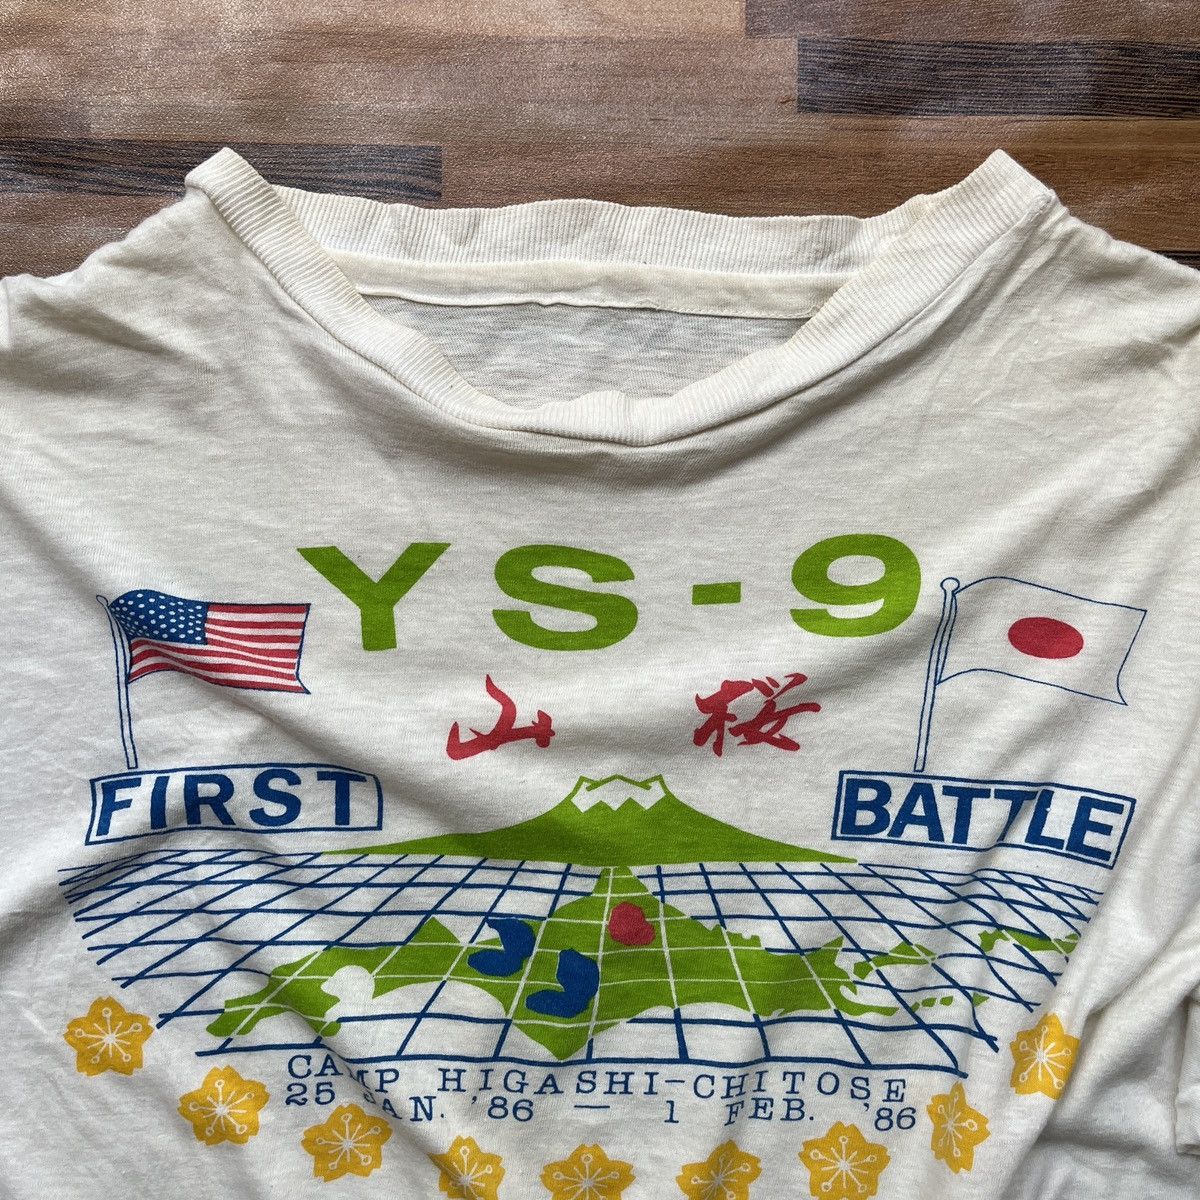 Vintage - USA Japan First Battle YS-9 Camp Higashi Chitose 1986 - 5